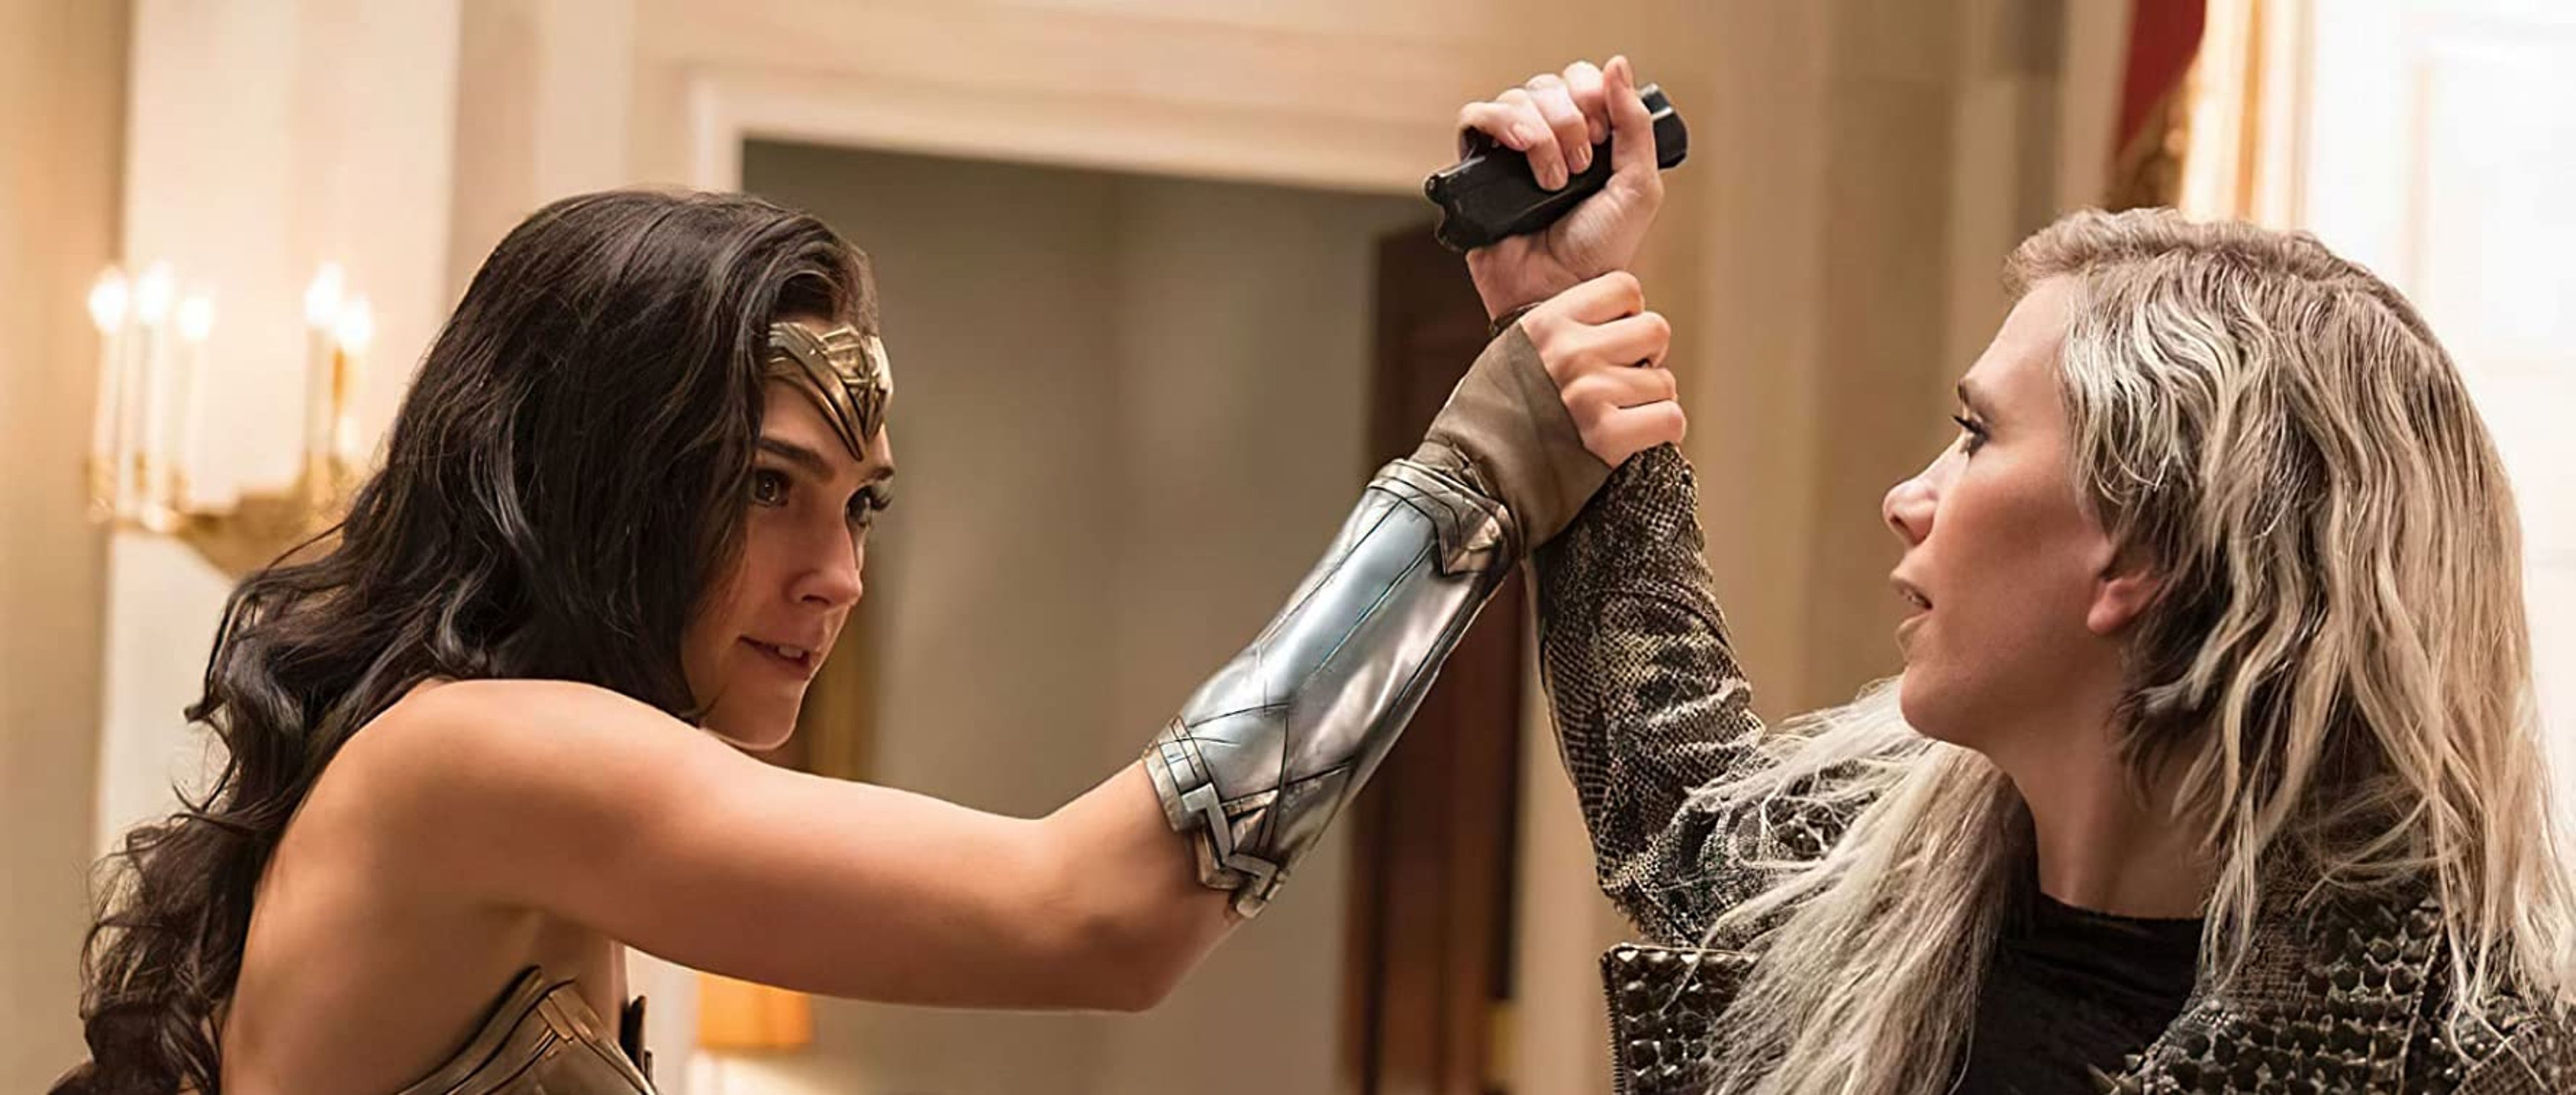 Wonder Woman 3: botta e risposta tra Patty Jenkins e James Gunn Copertina